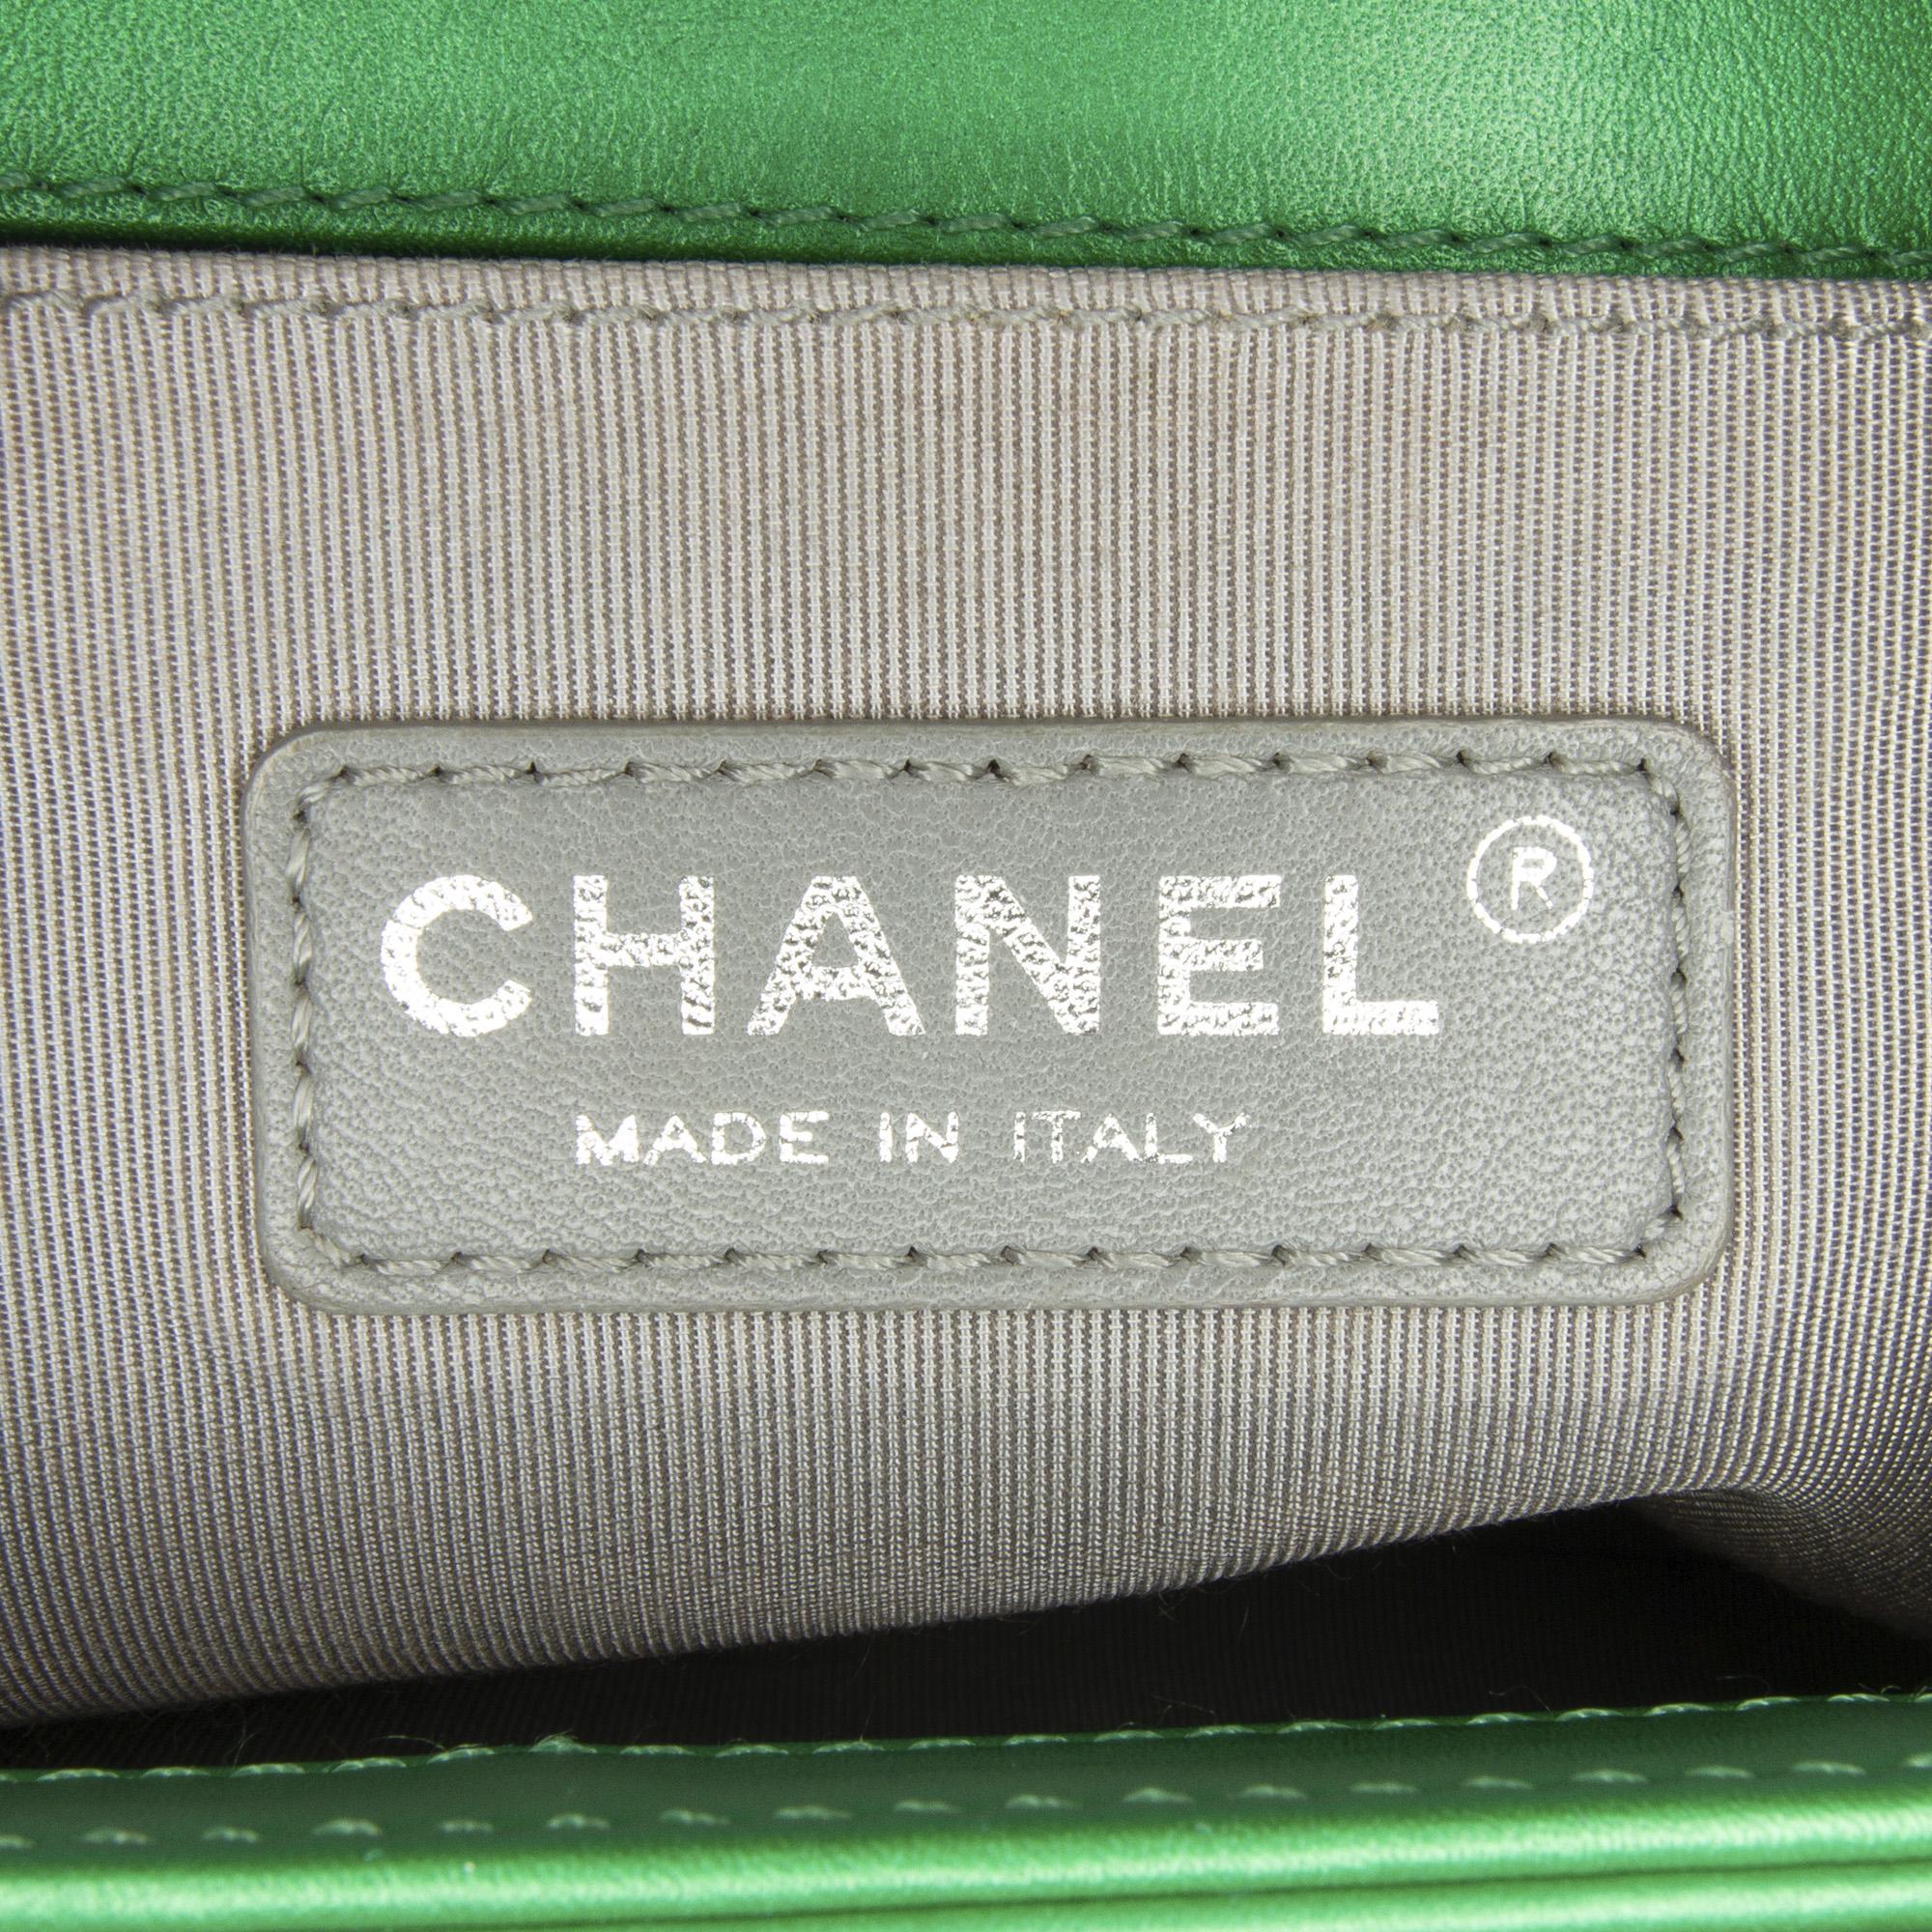 Chanel Green Medium Lambskin Boy Flap Bag